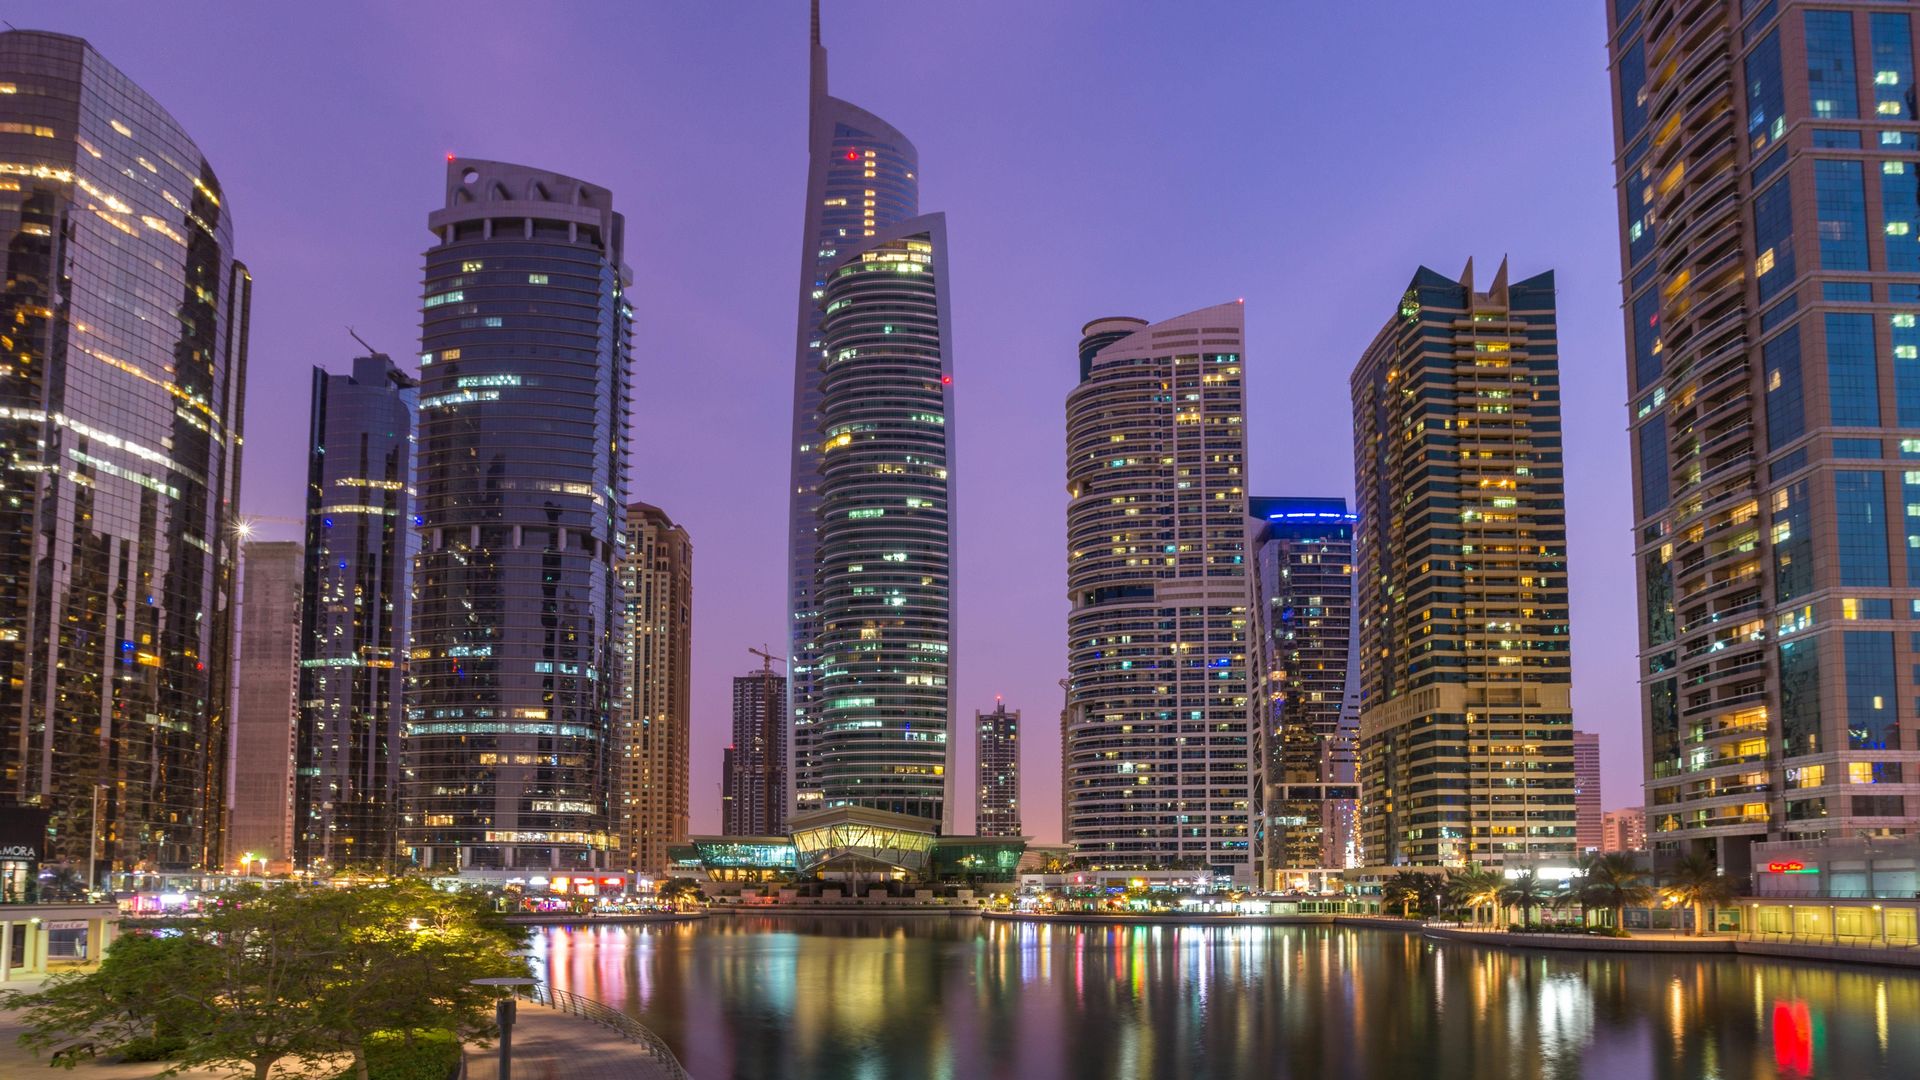 SO/ UPTOWN DUBAI HOTEL & RESIDENCES por Six Construct en Jumeirah Lake Towers, Dubai, EAU - 2